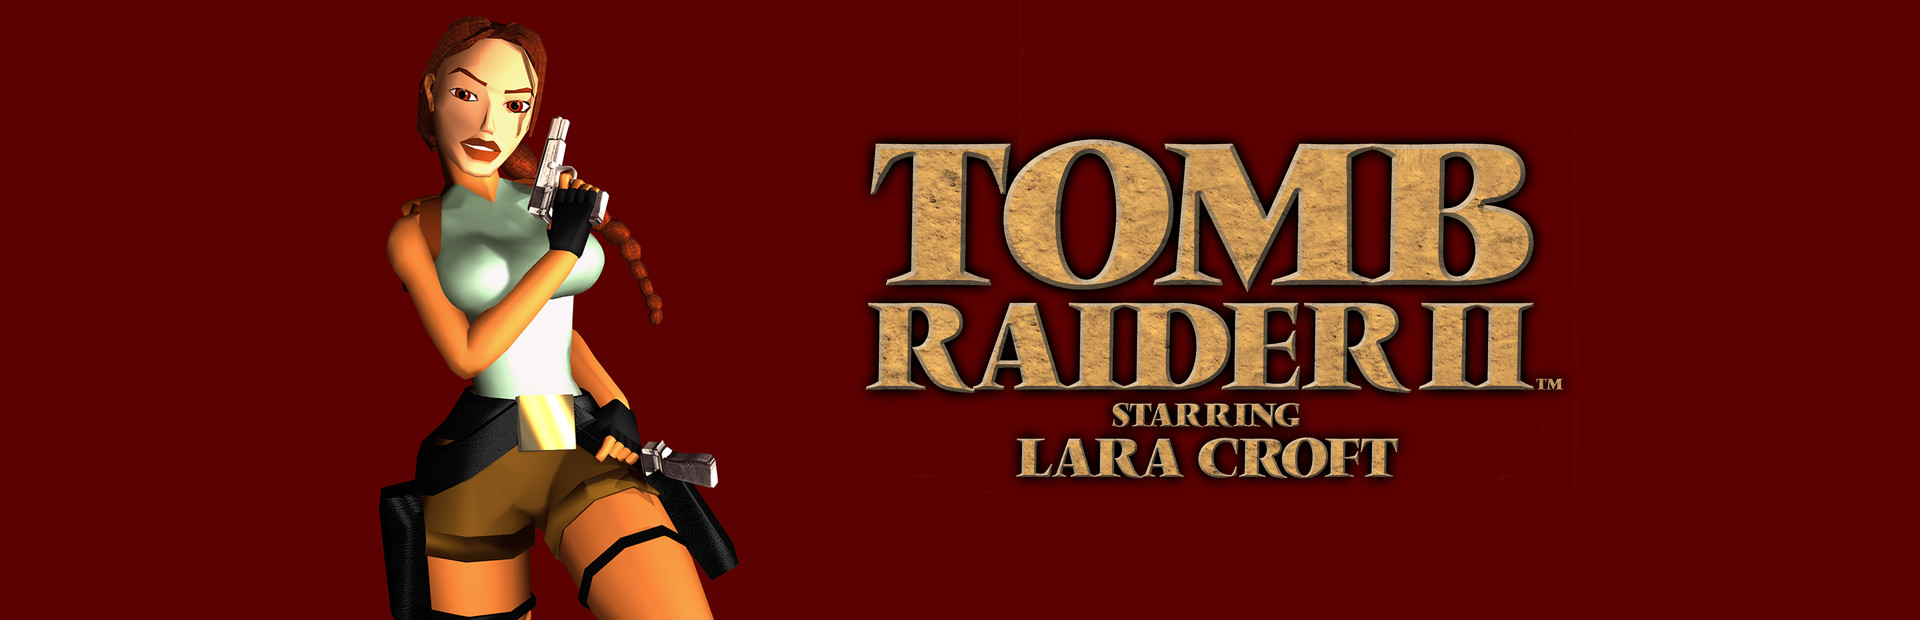 Tomb Raider II (1997) cover image